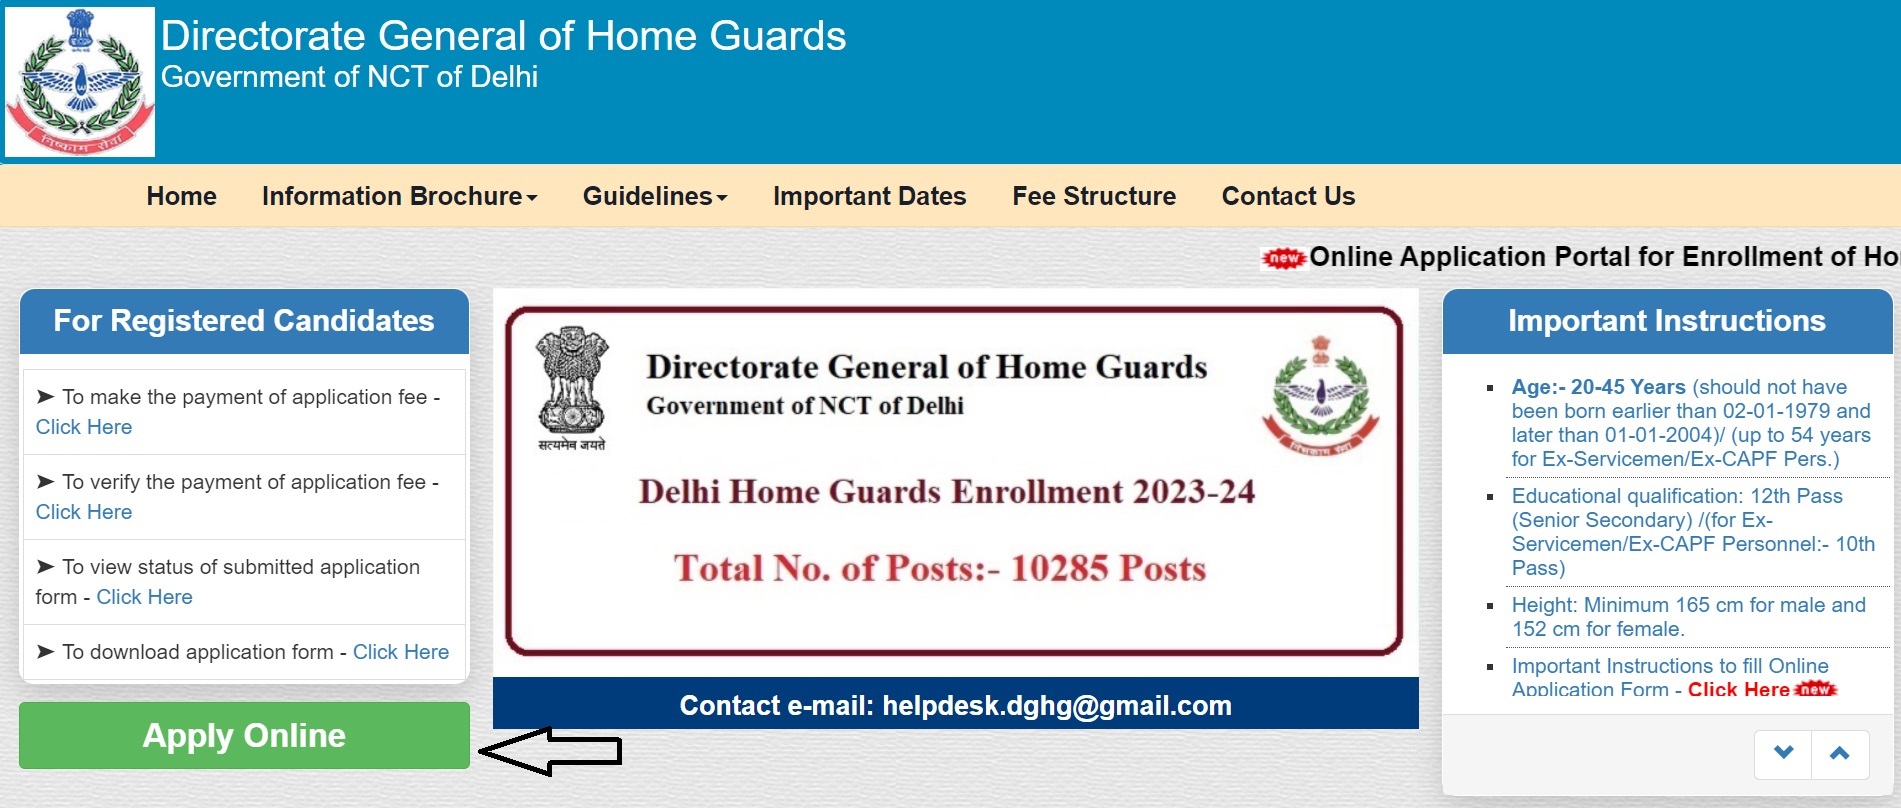 Home Guard Bharti